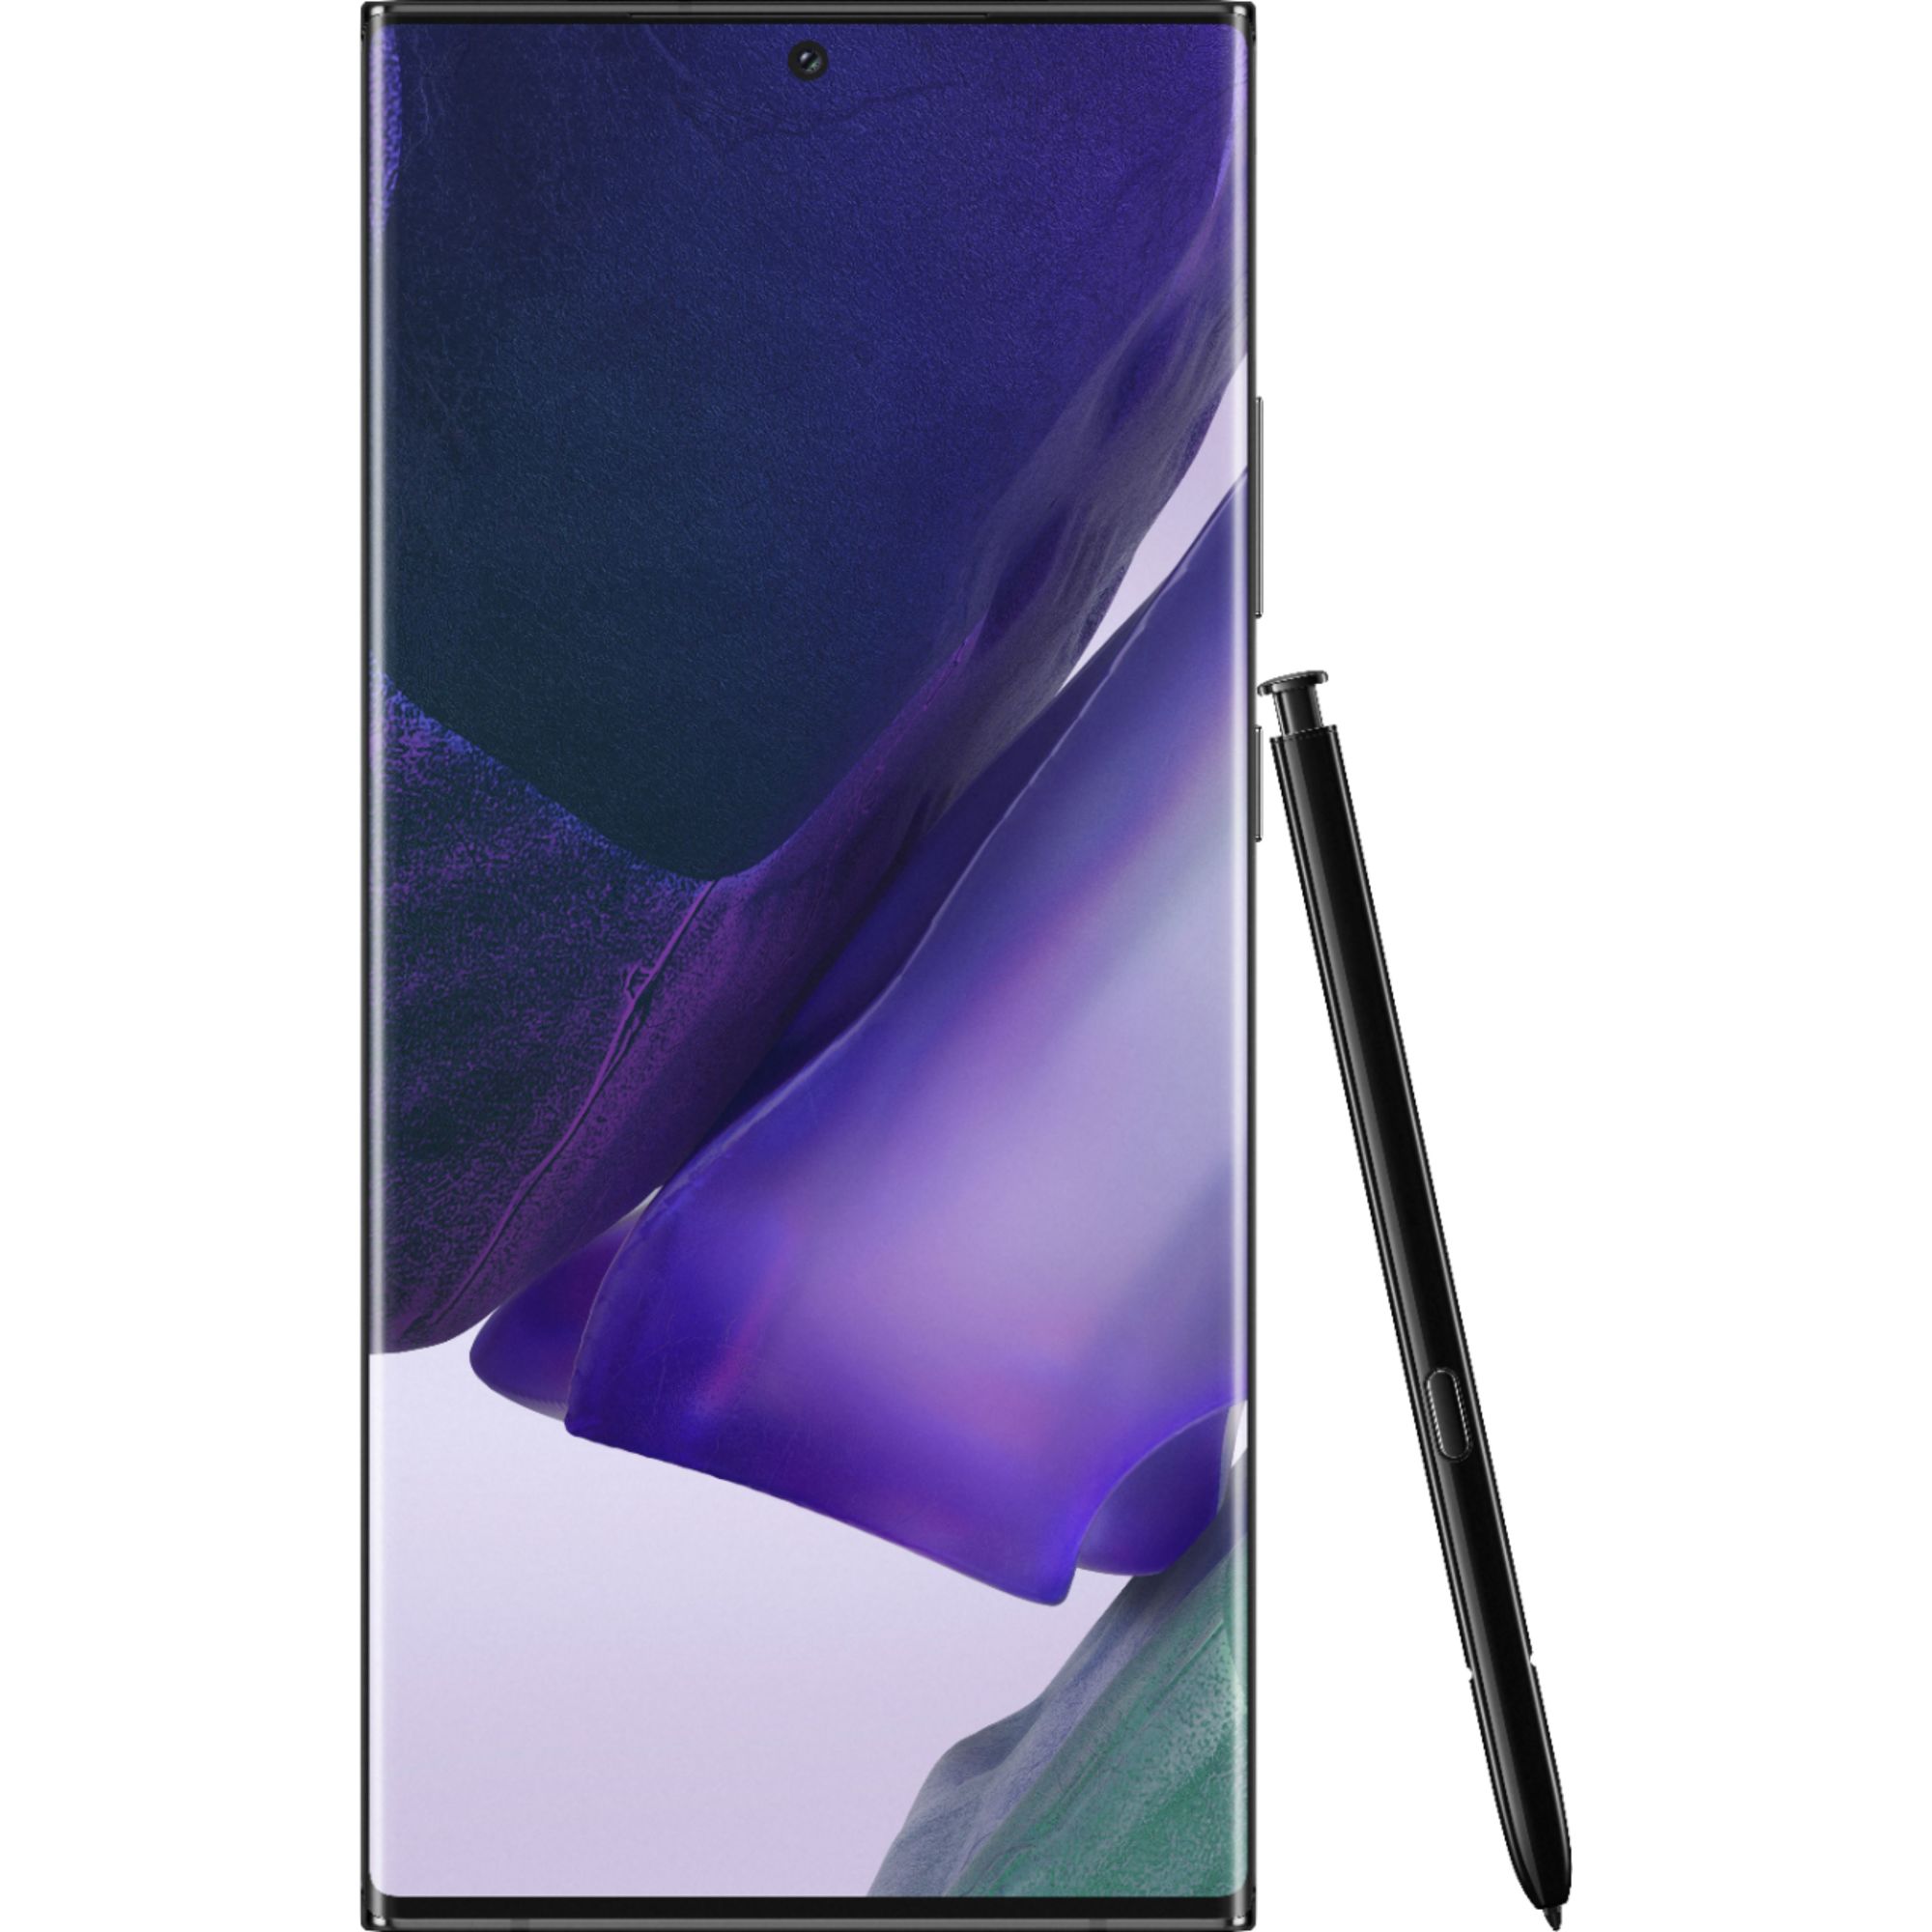 Samsung Galaxy Note20 Ultra N985F 256GB Hybrid Dual SIM Unlocked GSM Smartphone (International Variant/US Compatible LTE) - Mystic Black - image 1 of 4